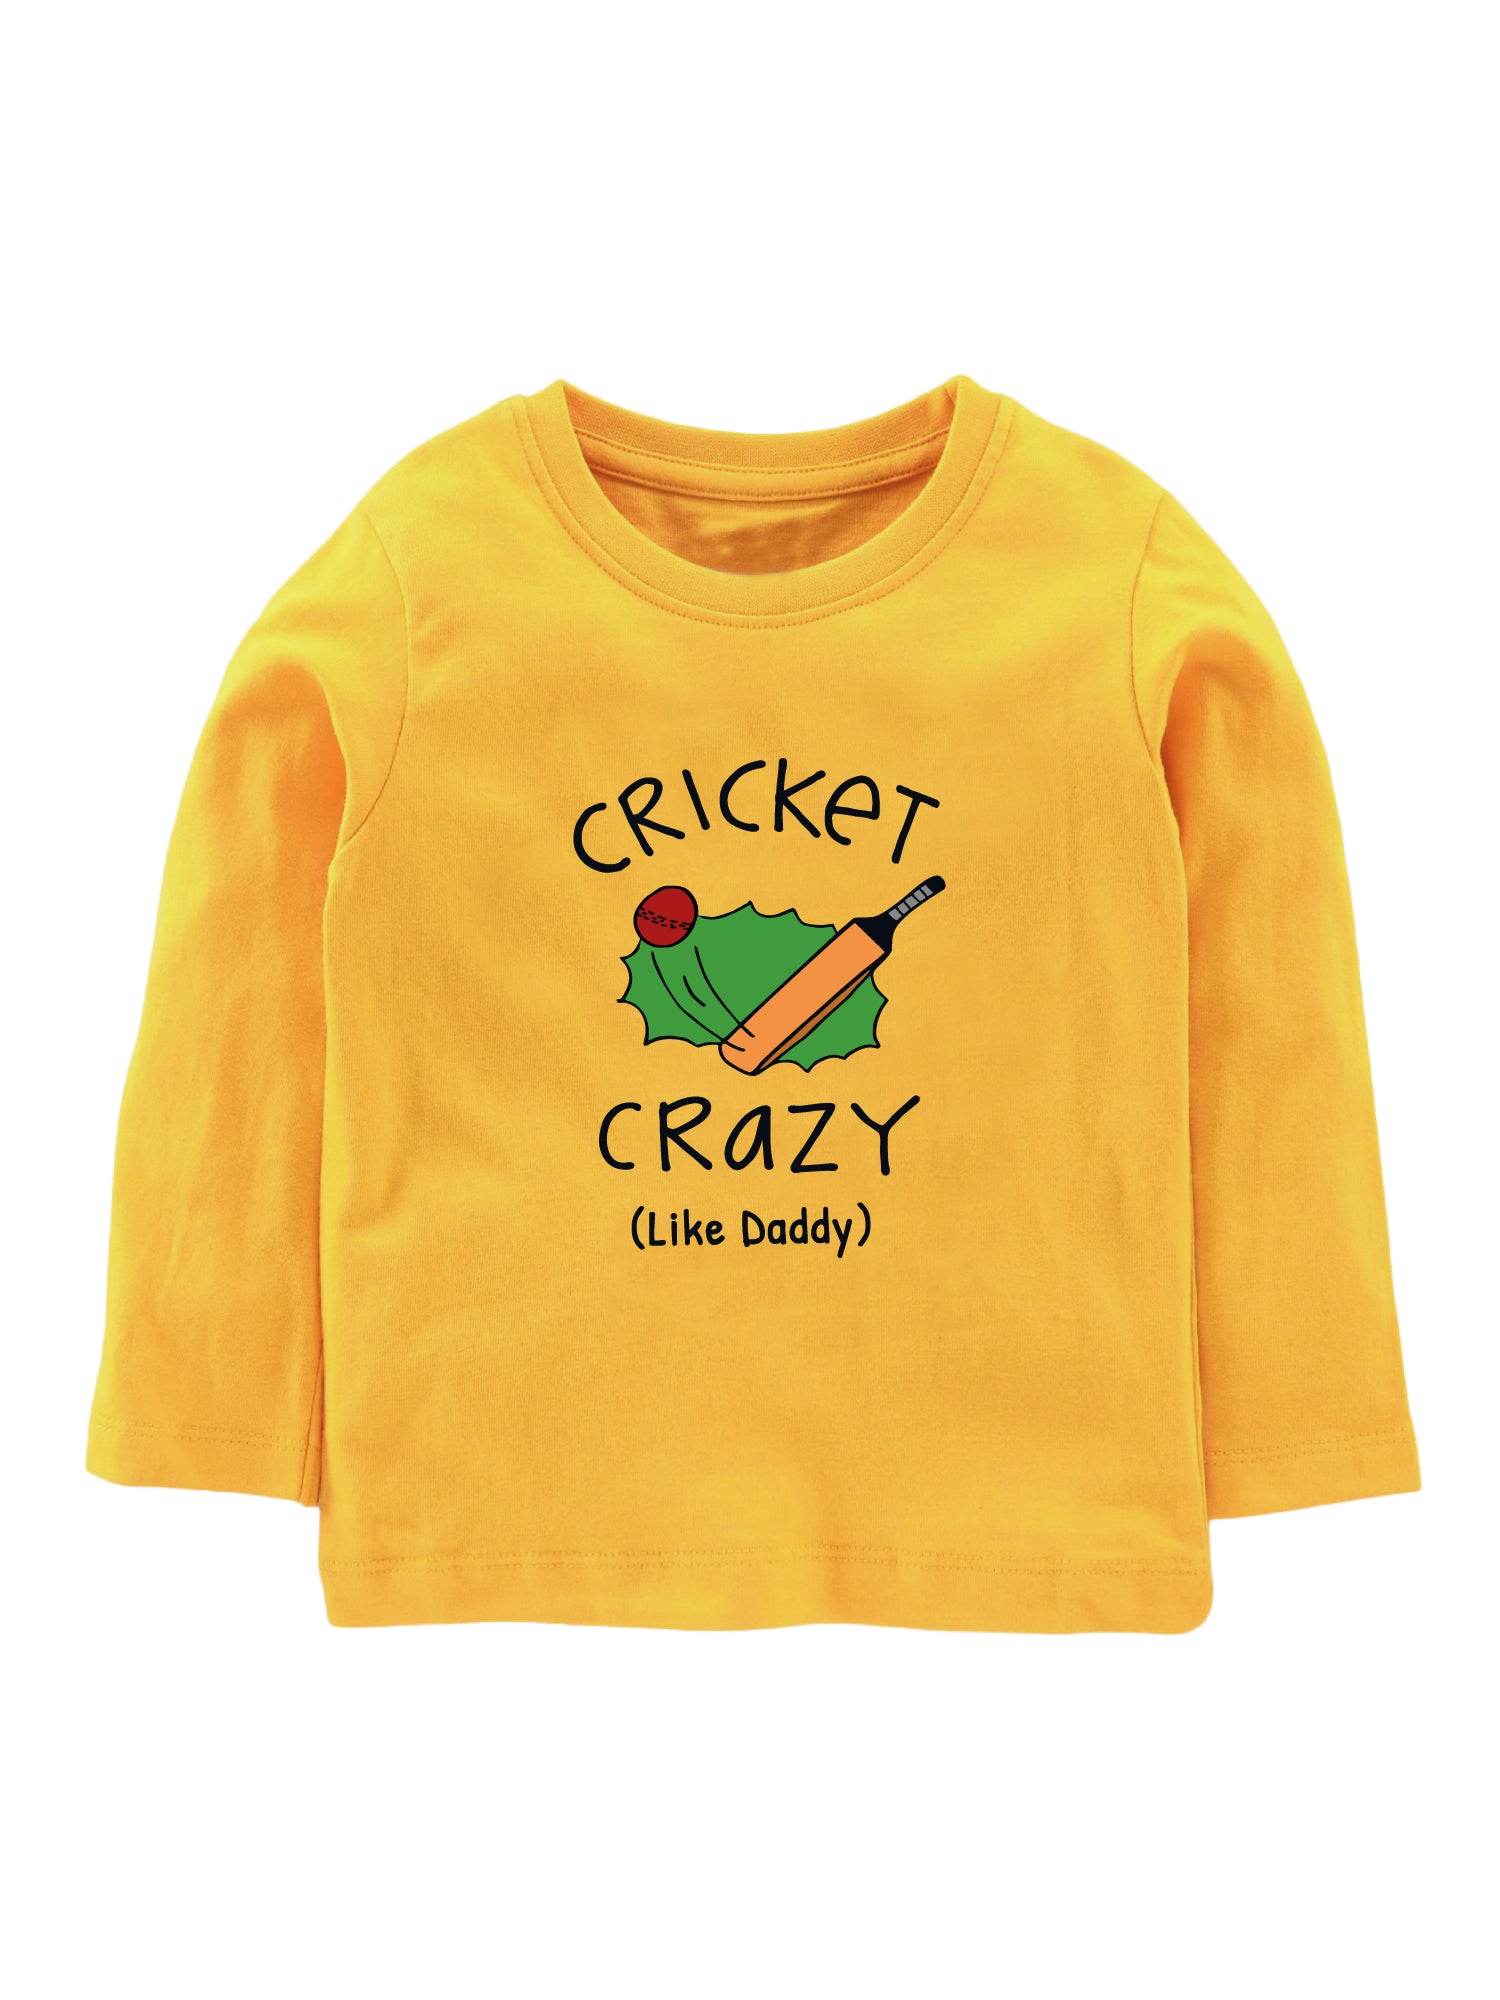 Cricket Crazy - Tee